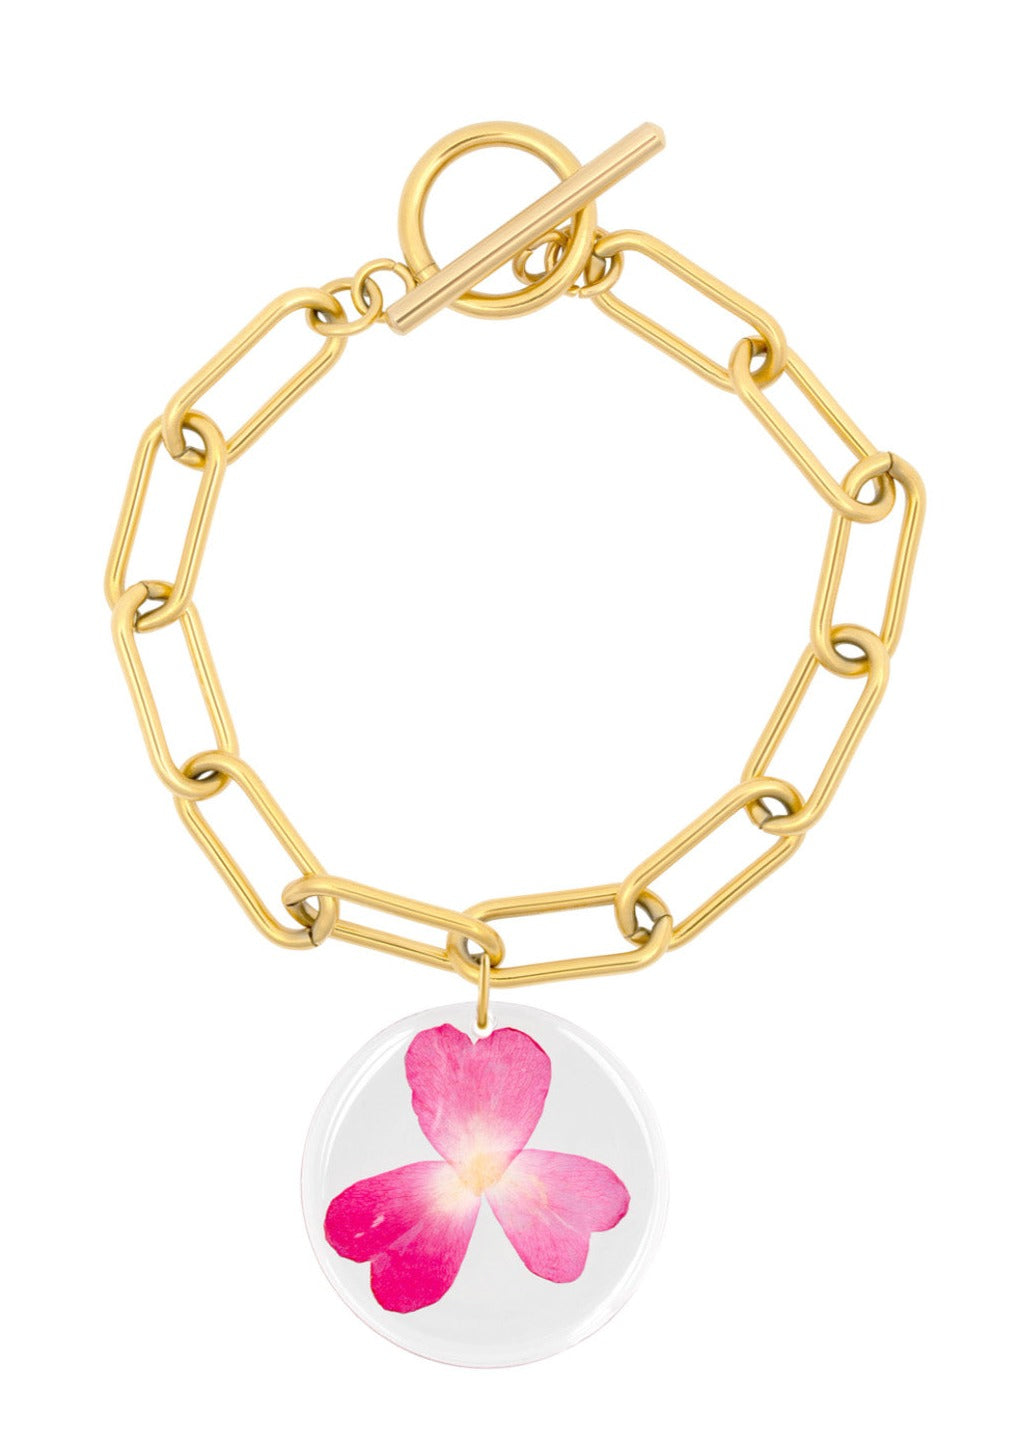 Rose petal pendant on gold chain bracelet.